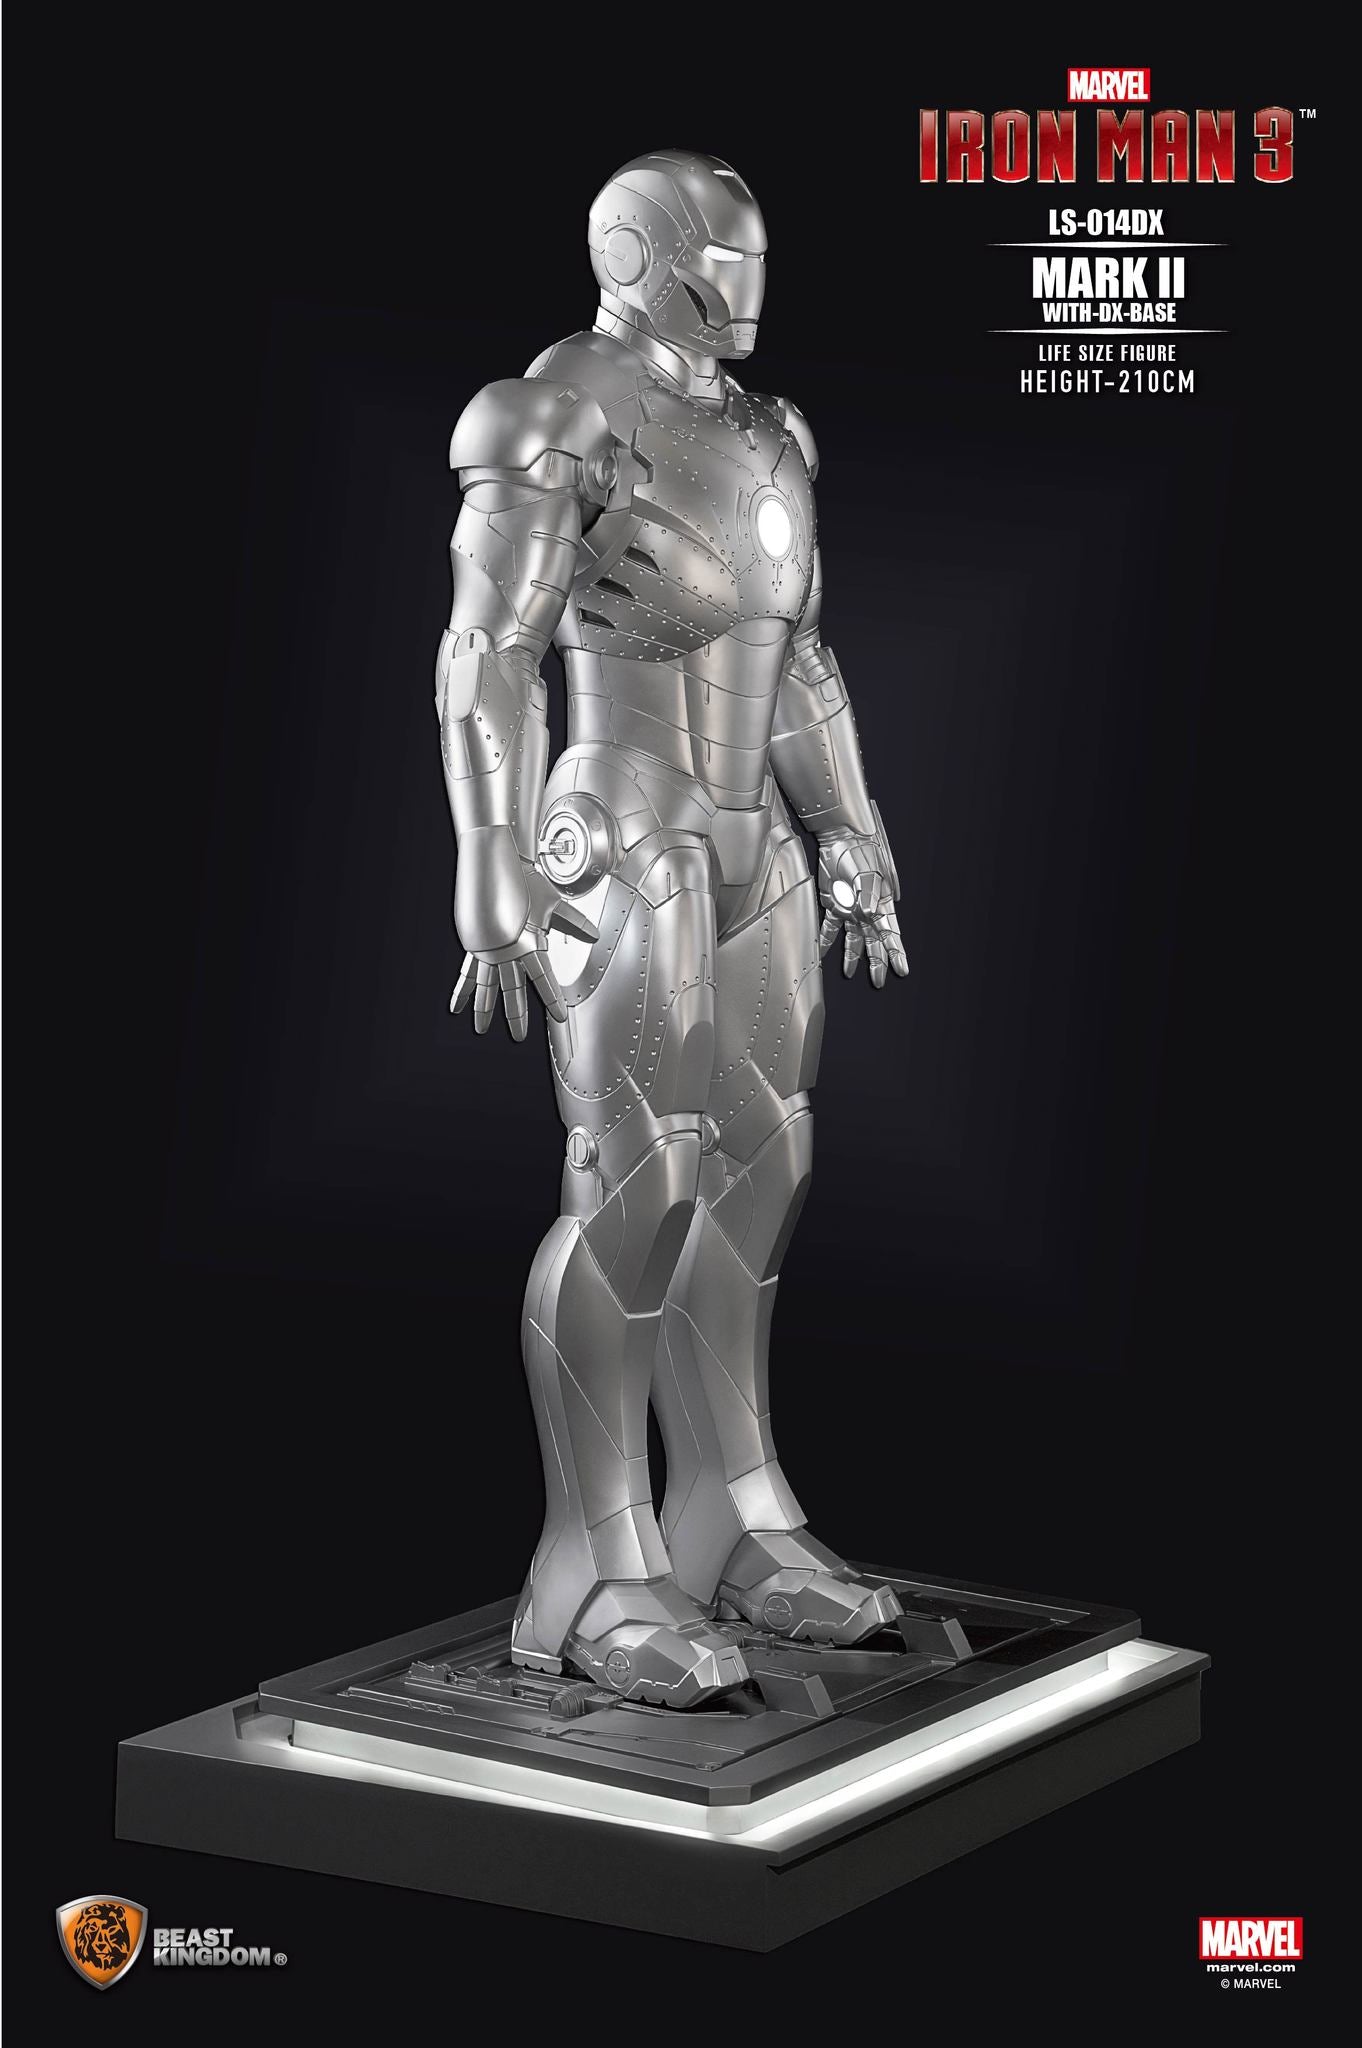 Beast Kingdom Life Size Marvel: Iron Man 3 - Mark II Deluxe Escala 1/1